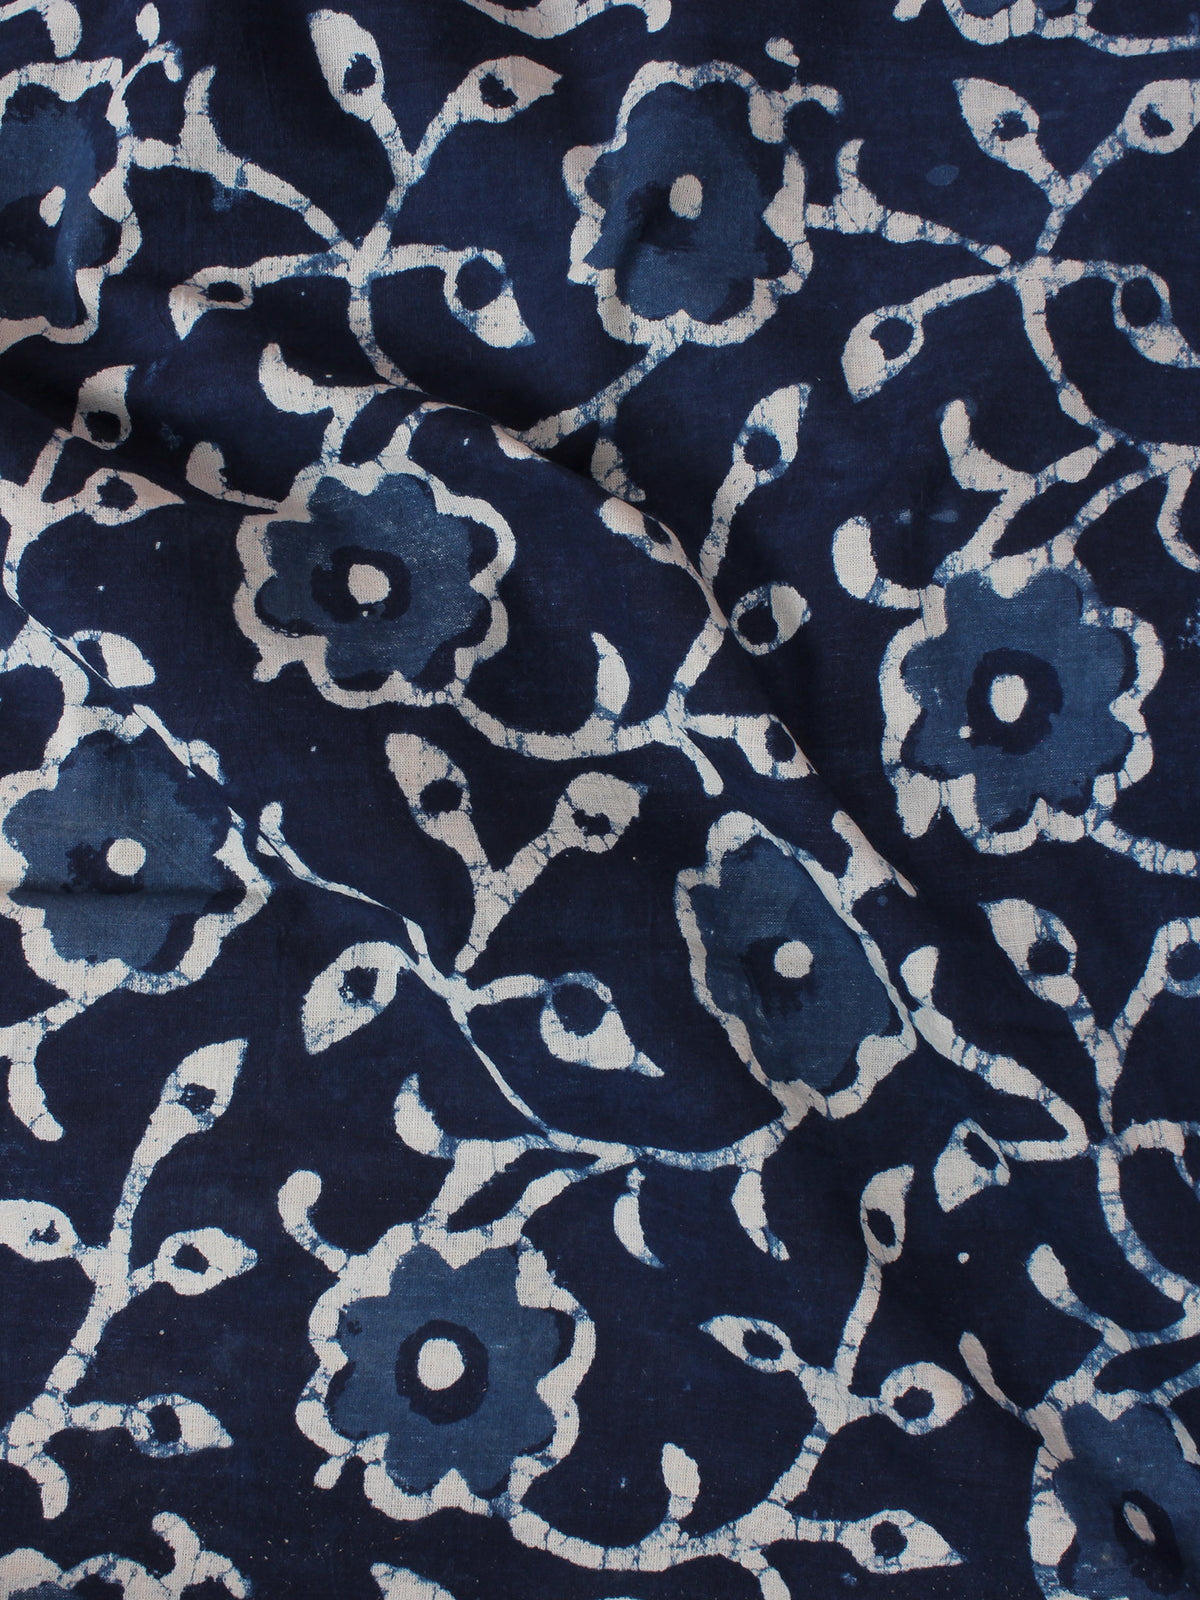 Indigo Blue White Hand Block Printed Cotton Fabric Per Meter - F0916015